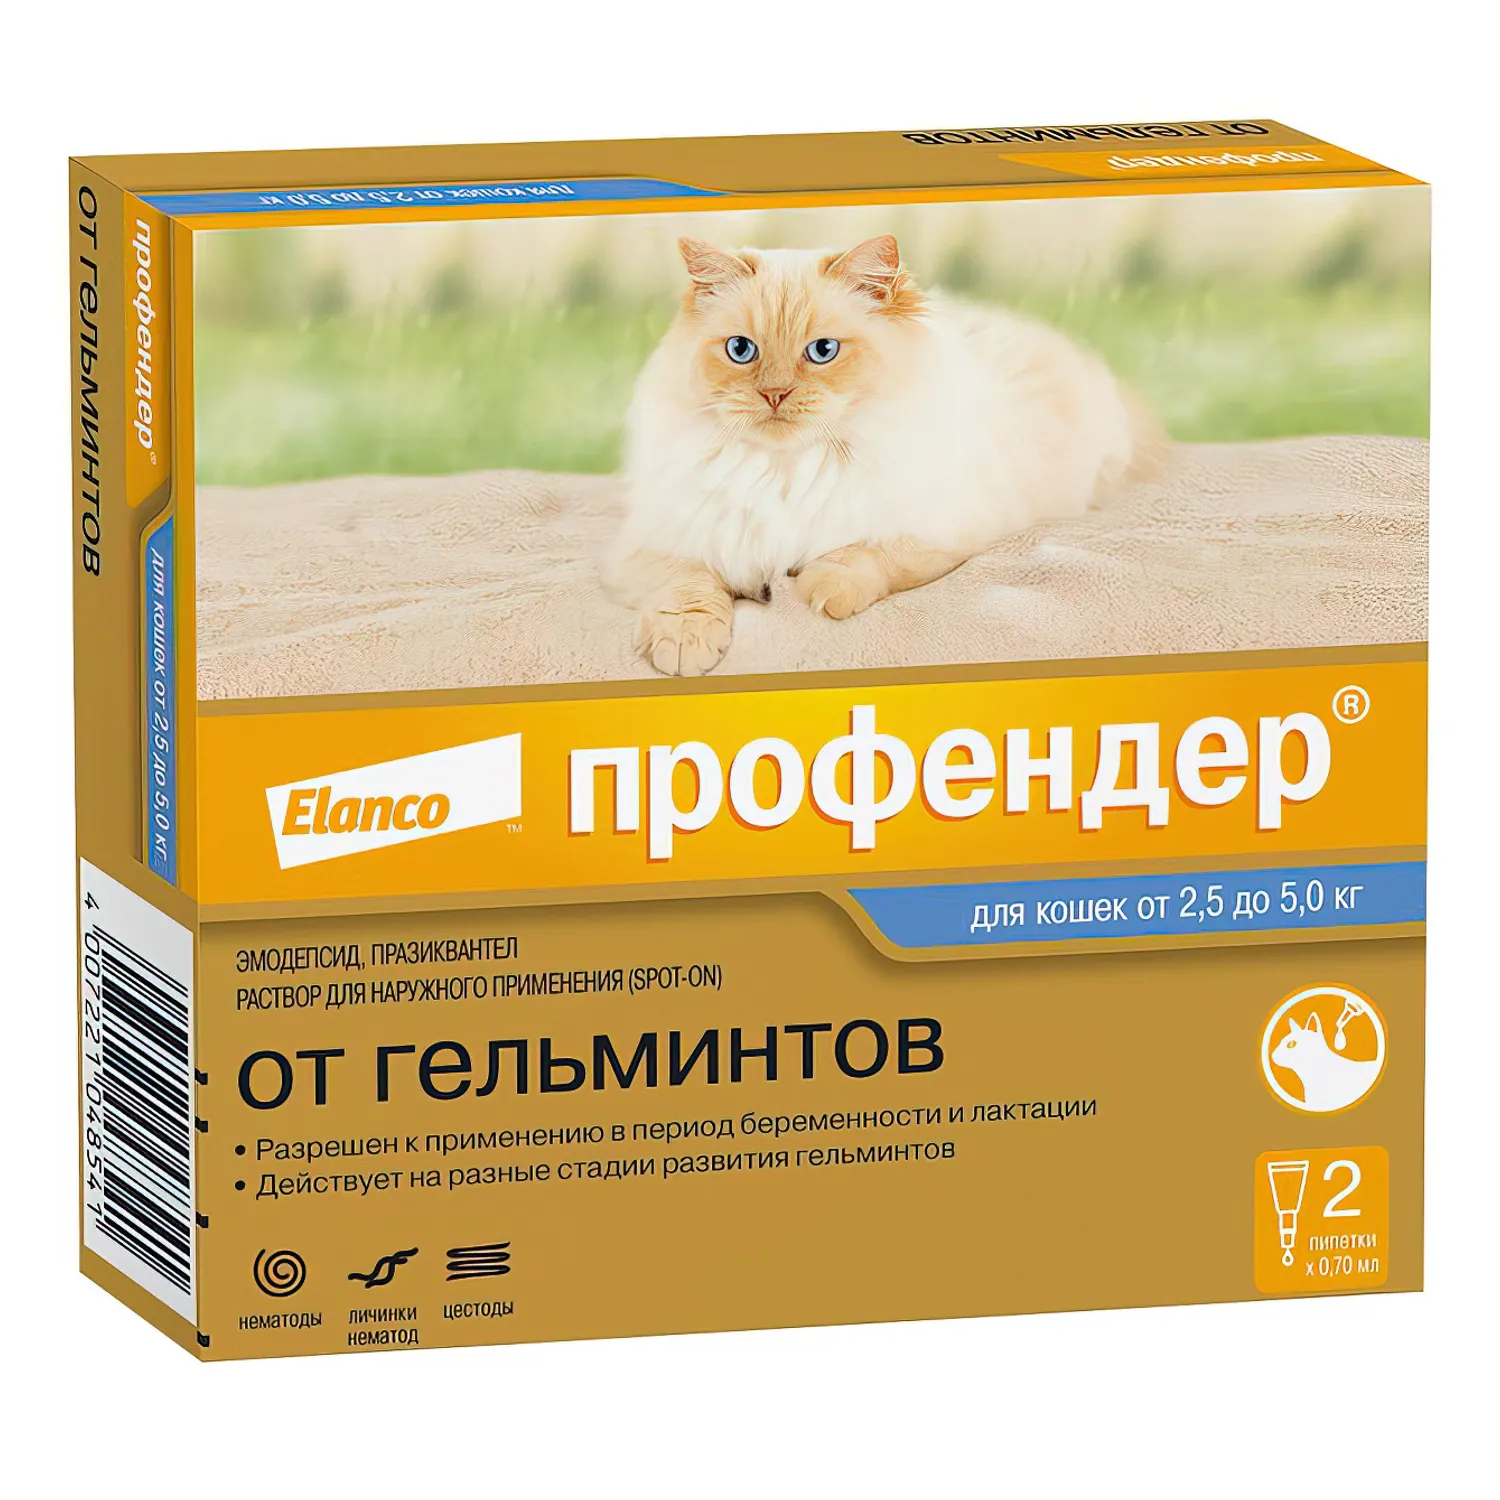 Bayer Профендер капли на холку от гельминтов для кошек 2,5-5 кг (2 пипетки х 0,7 мл)